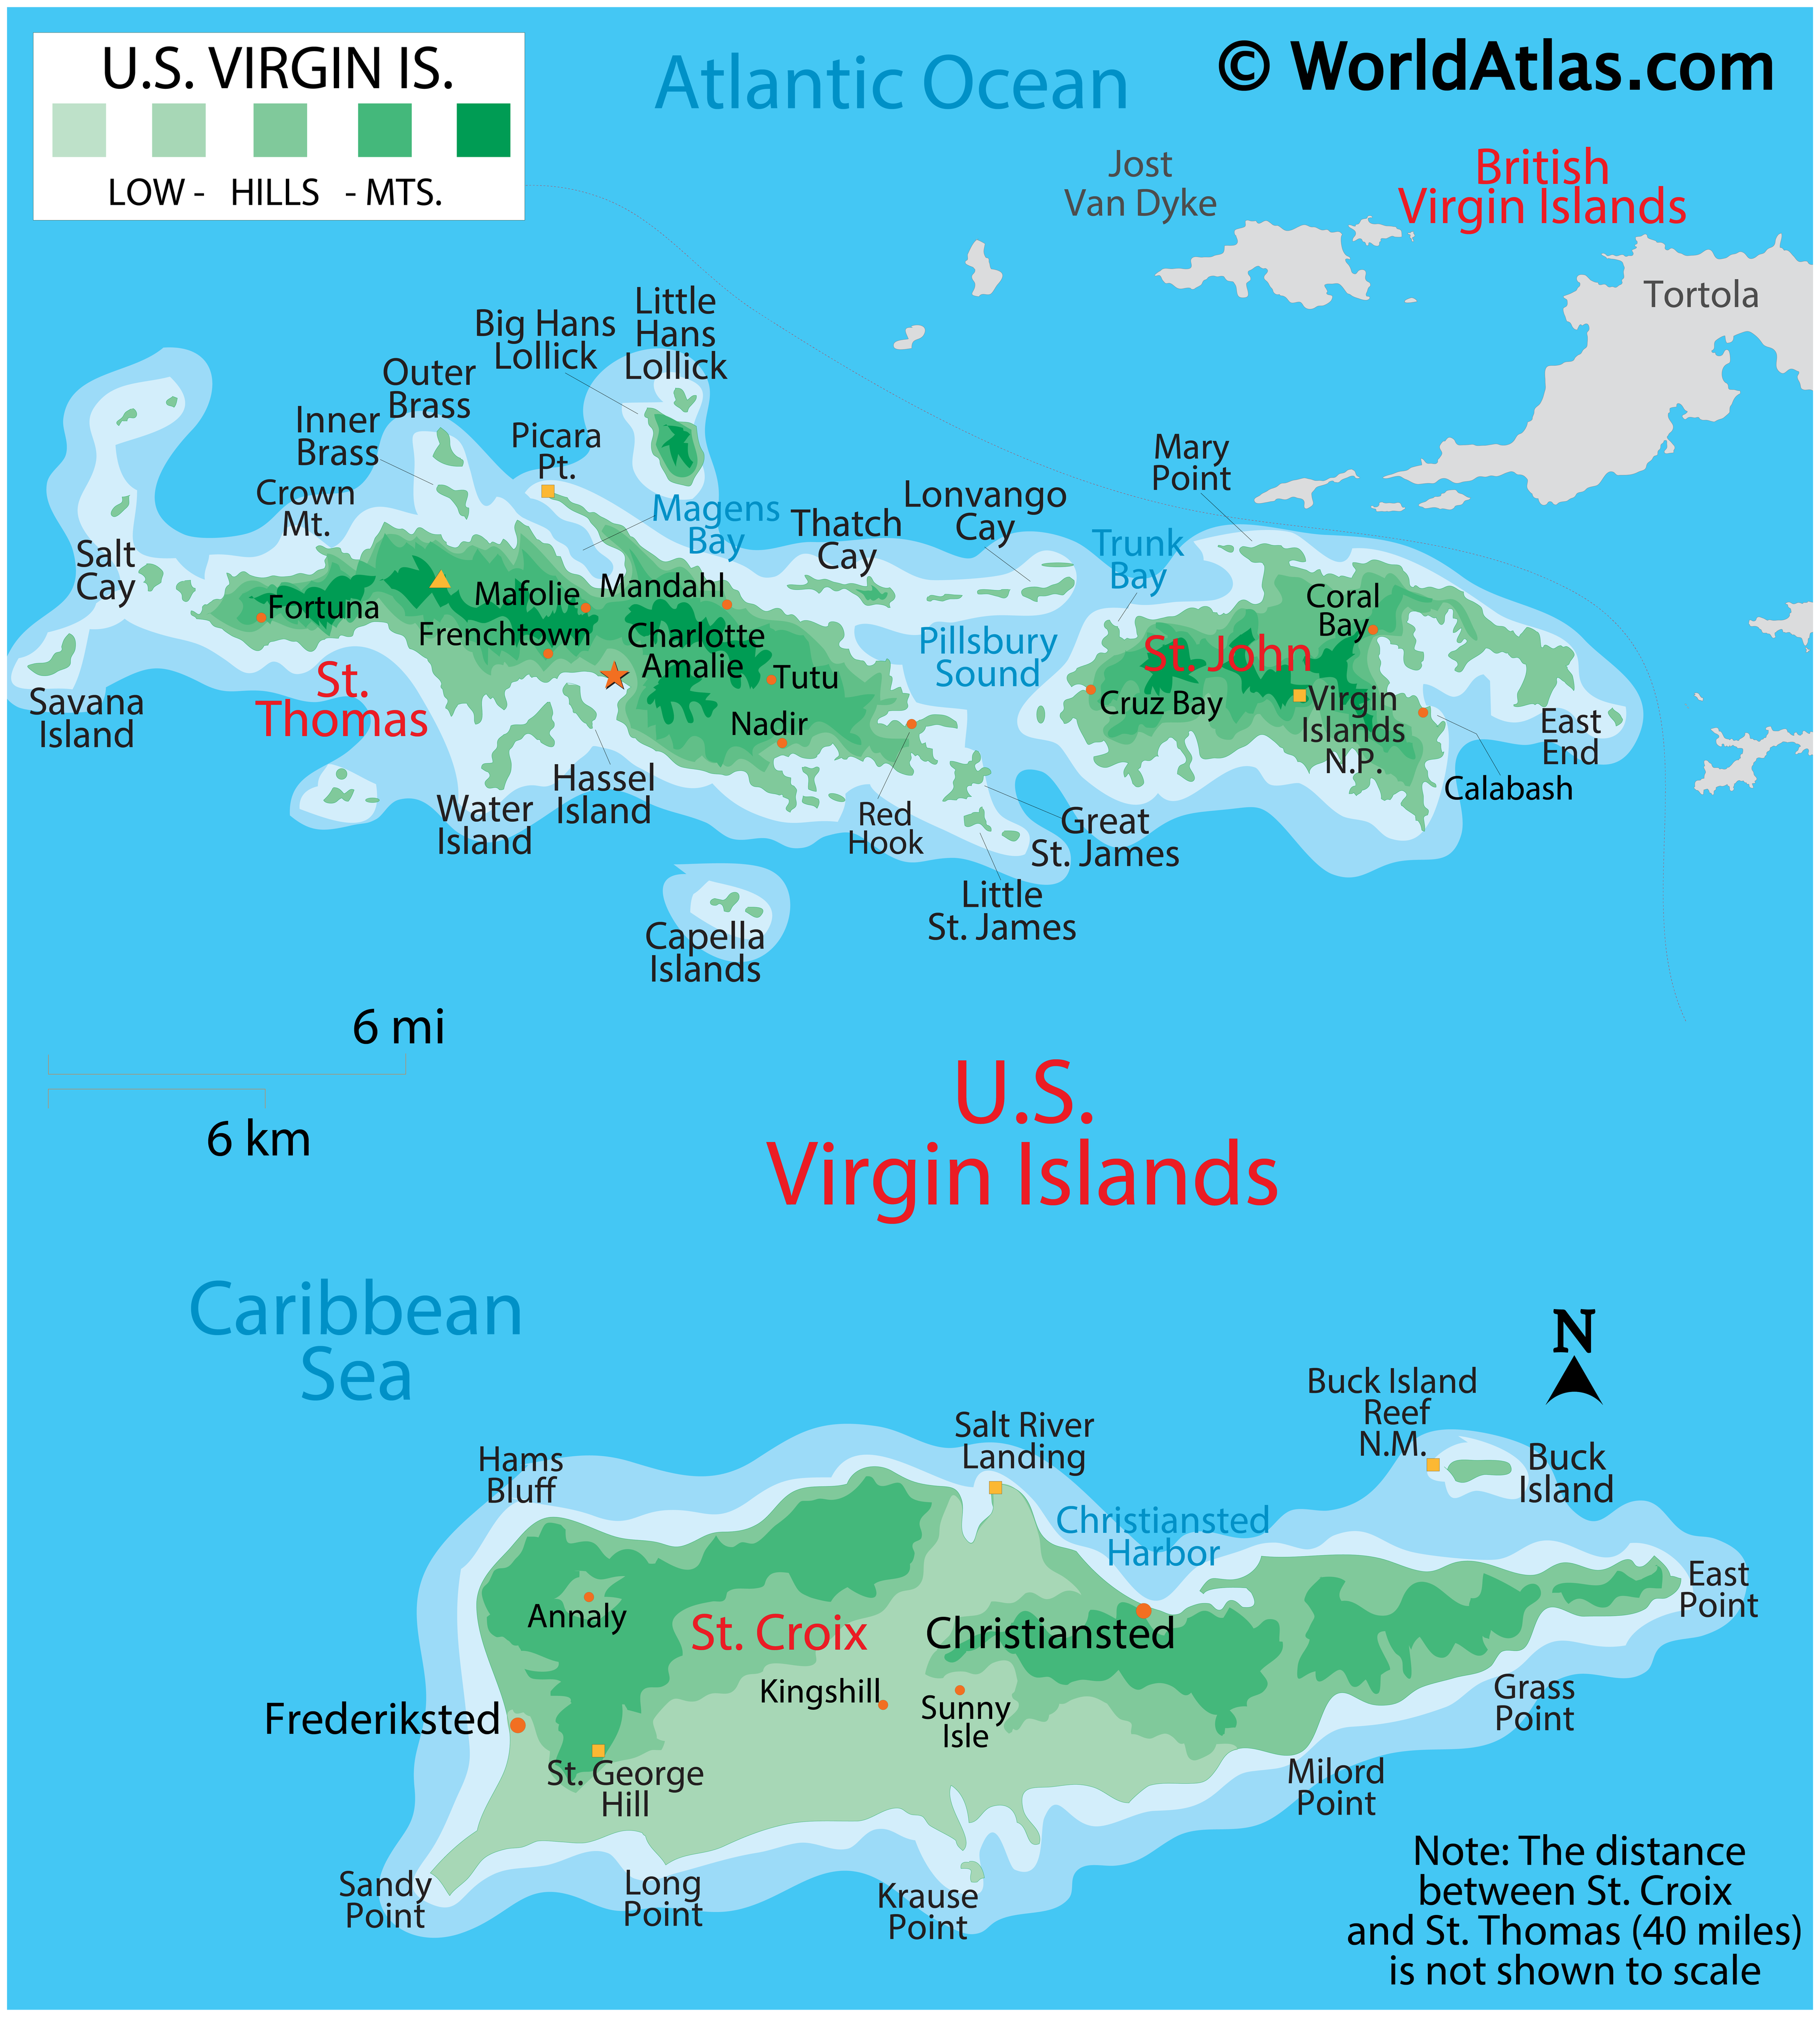 Marijuana Possession Now Decriminalized In US Virgin Islands